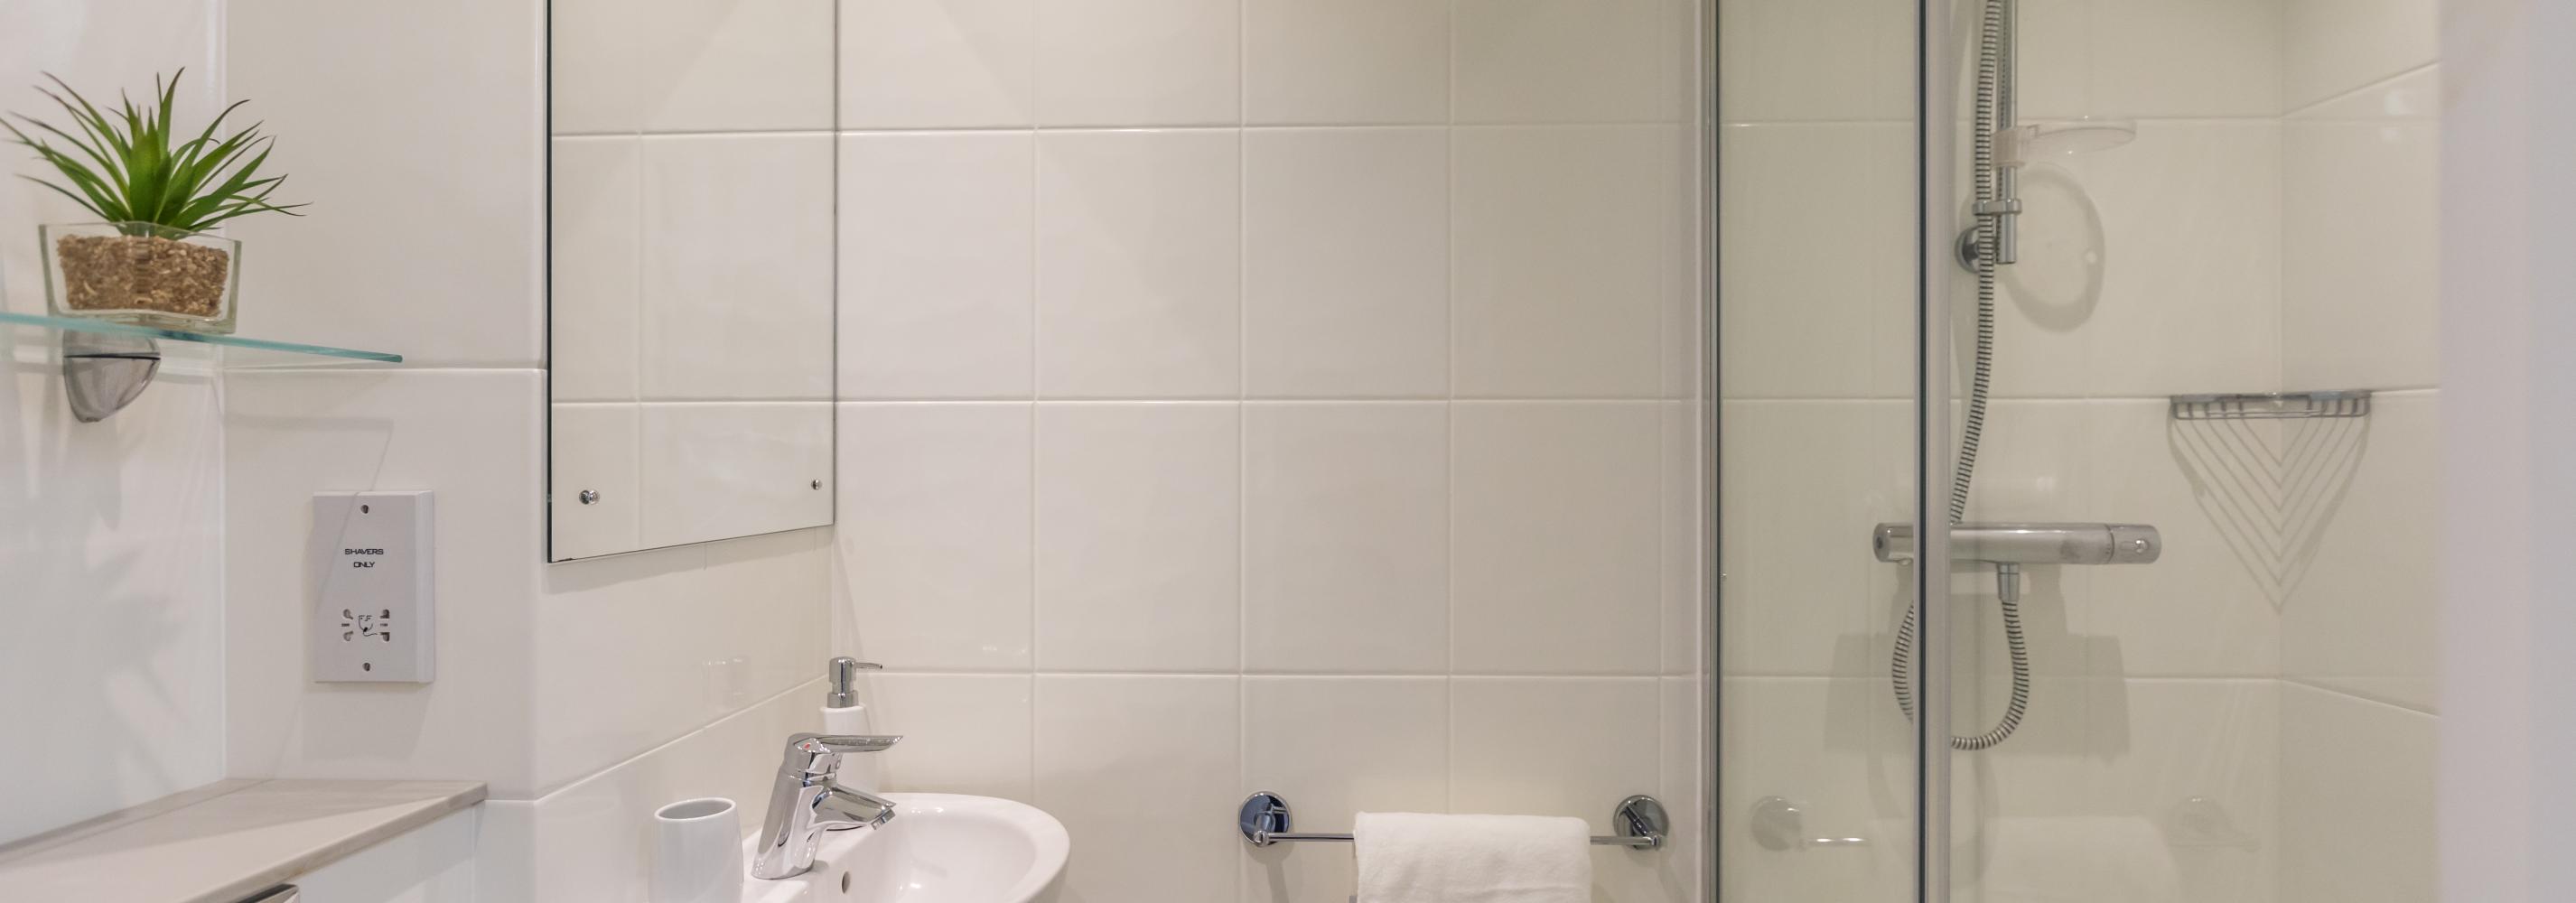 Bathroom, mirror, shelves, sink, toilet roll holder, toilet, towel rail and shower